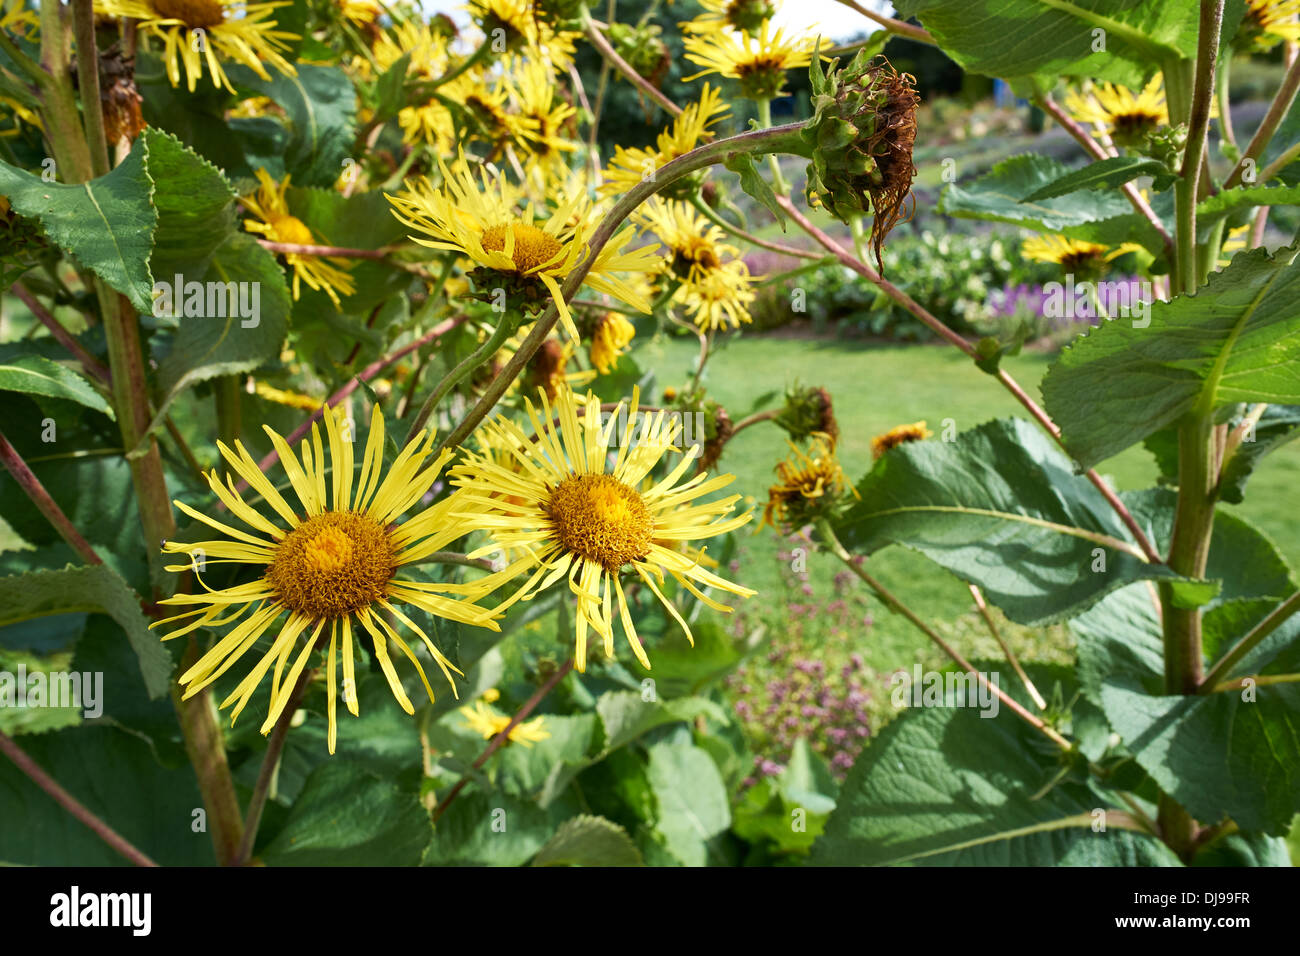 English Country Garden, Yellow daisies, England, UK. Stock Photo